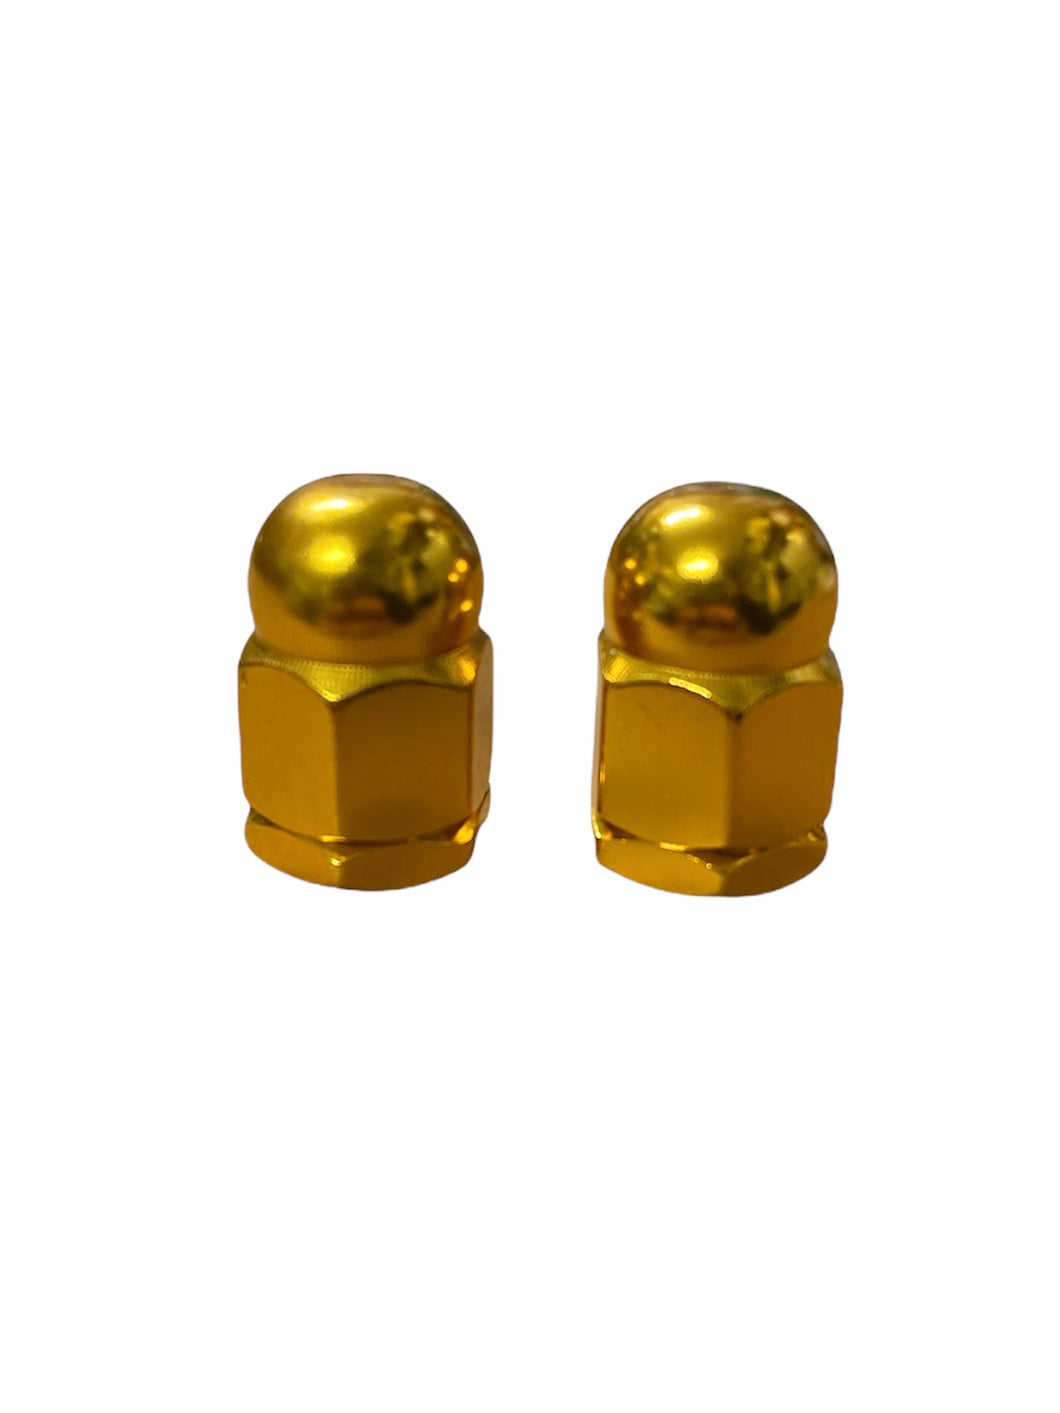 Hex Dome Nut (Large) Valve Caps Gold